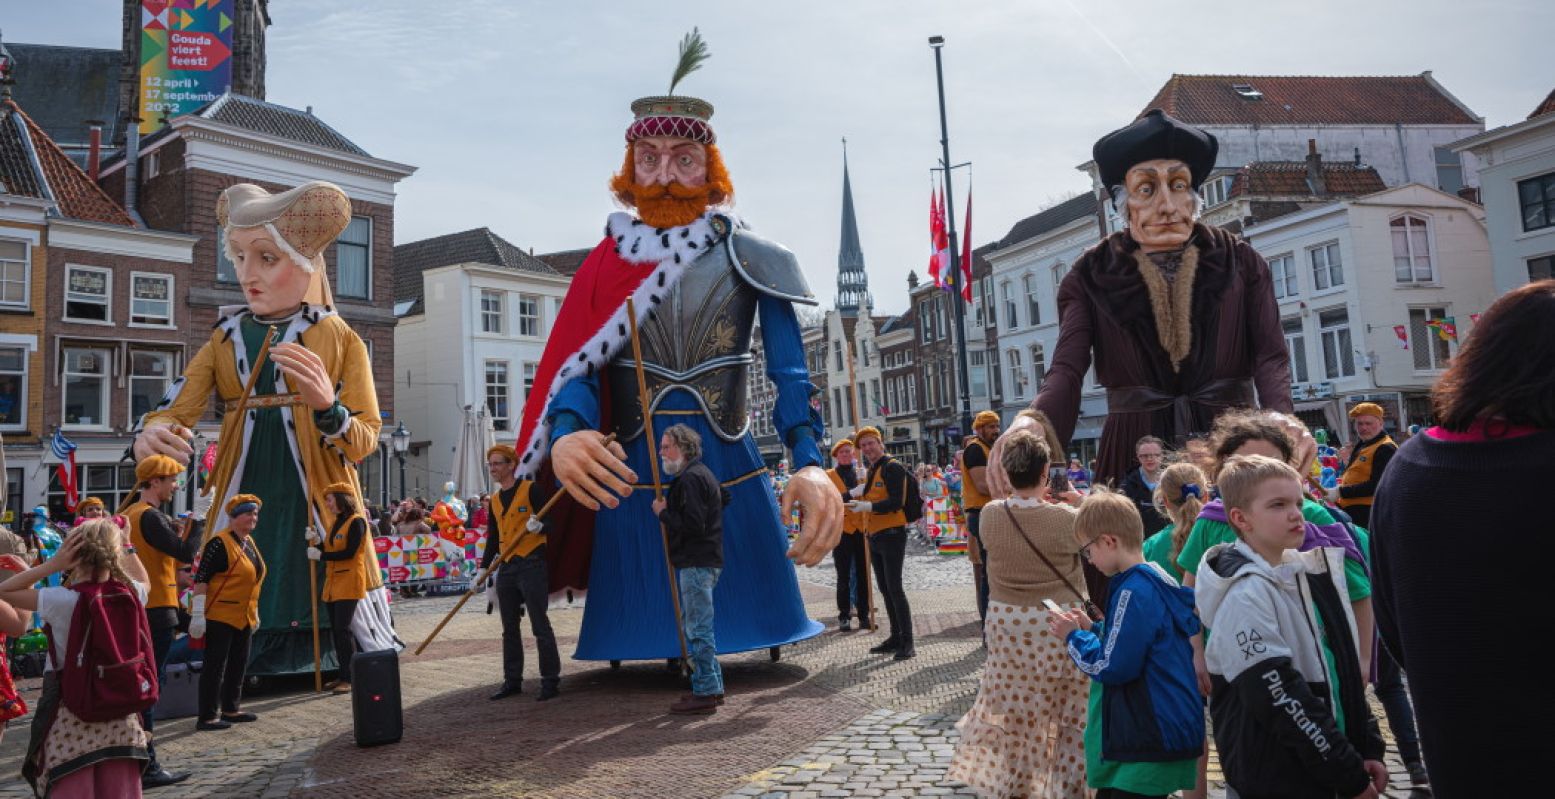 Koning Willem-Alexander opende het feestjaar op 12 april met de tentoonstelling het Wonder van Gouda. Foto: VVV Gouda